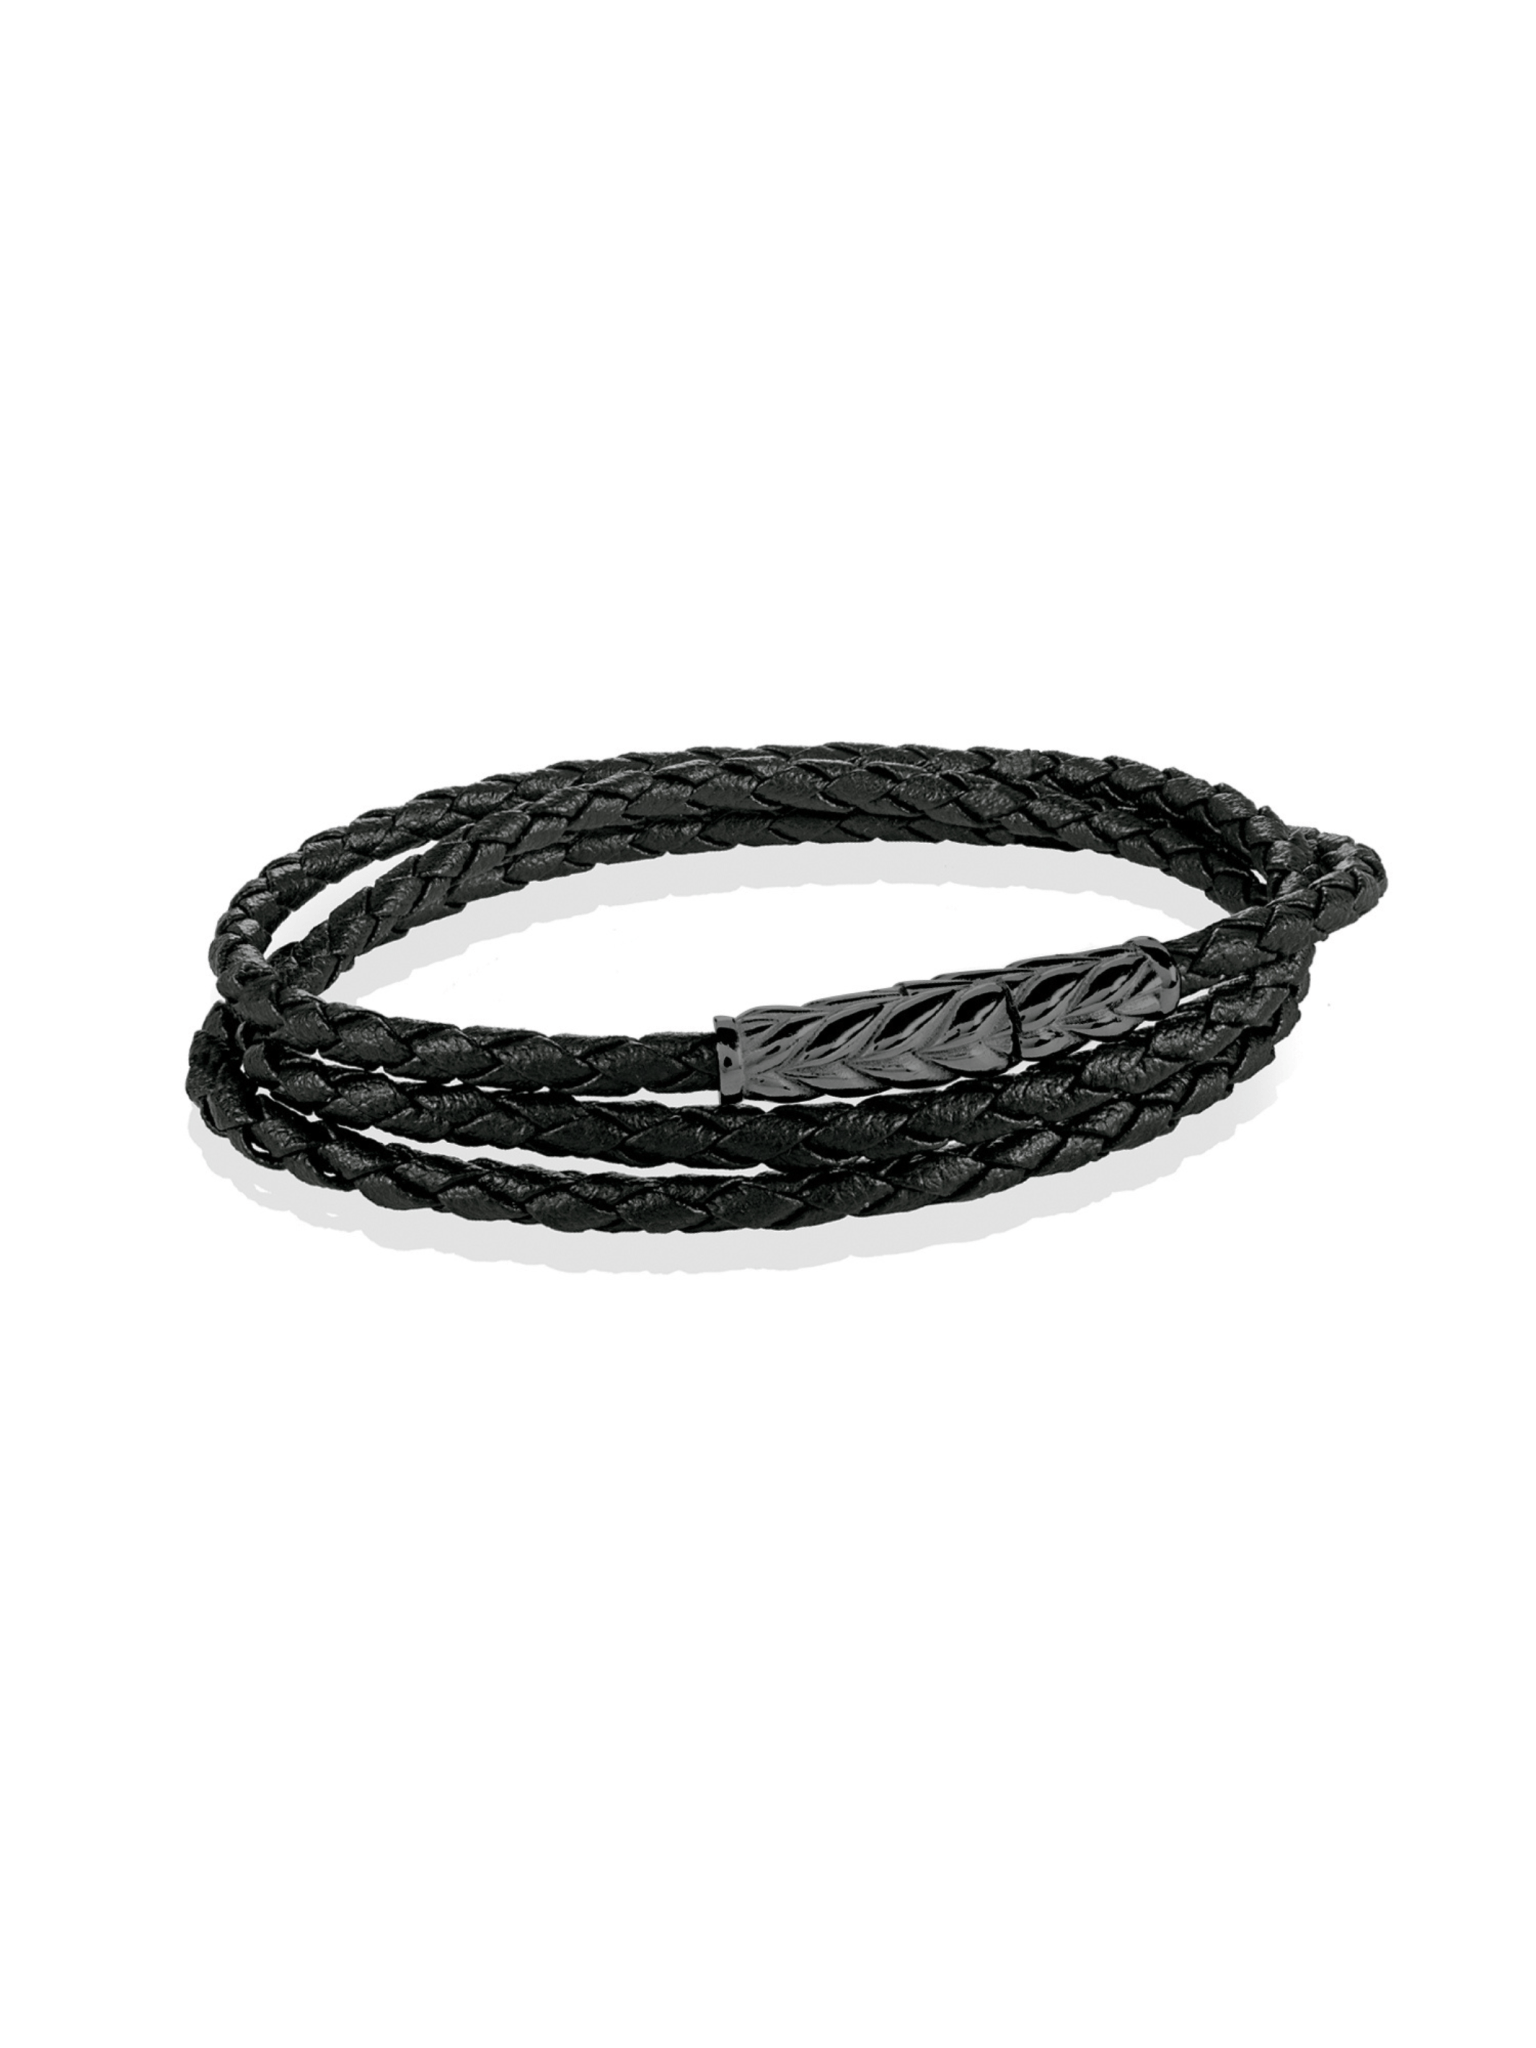 Men's Triple Wrap Leather Bracelet